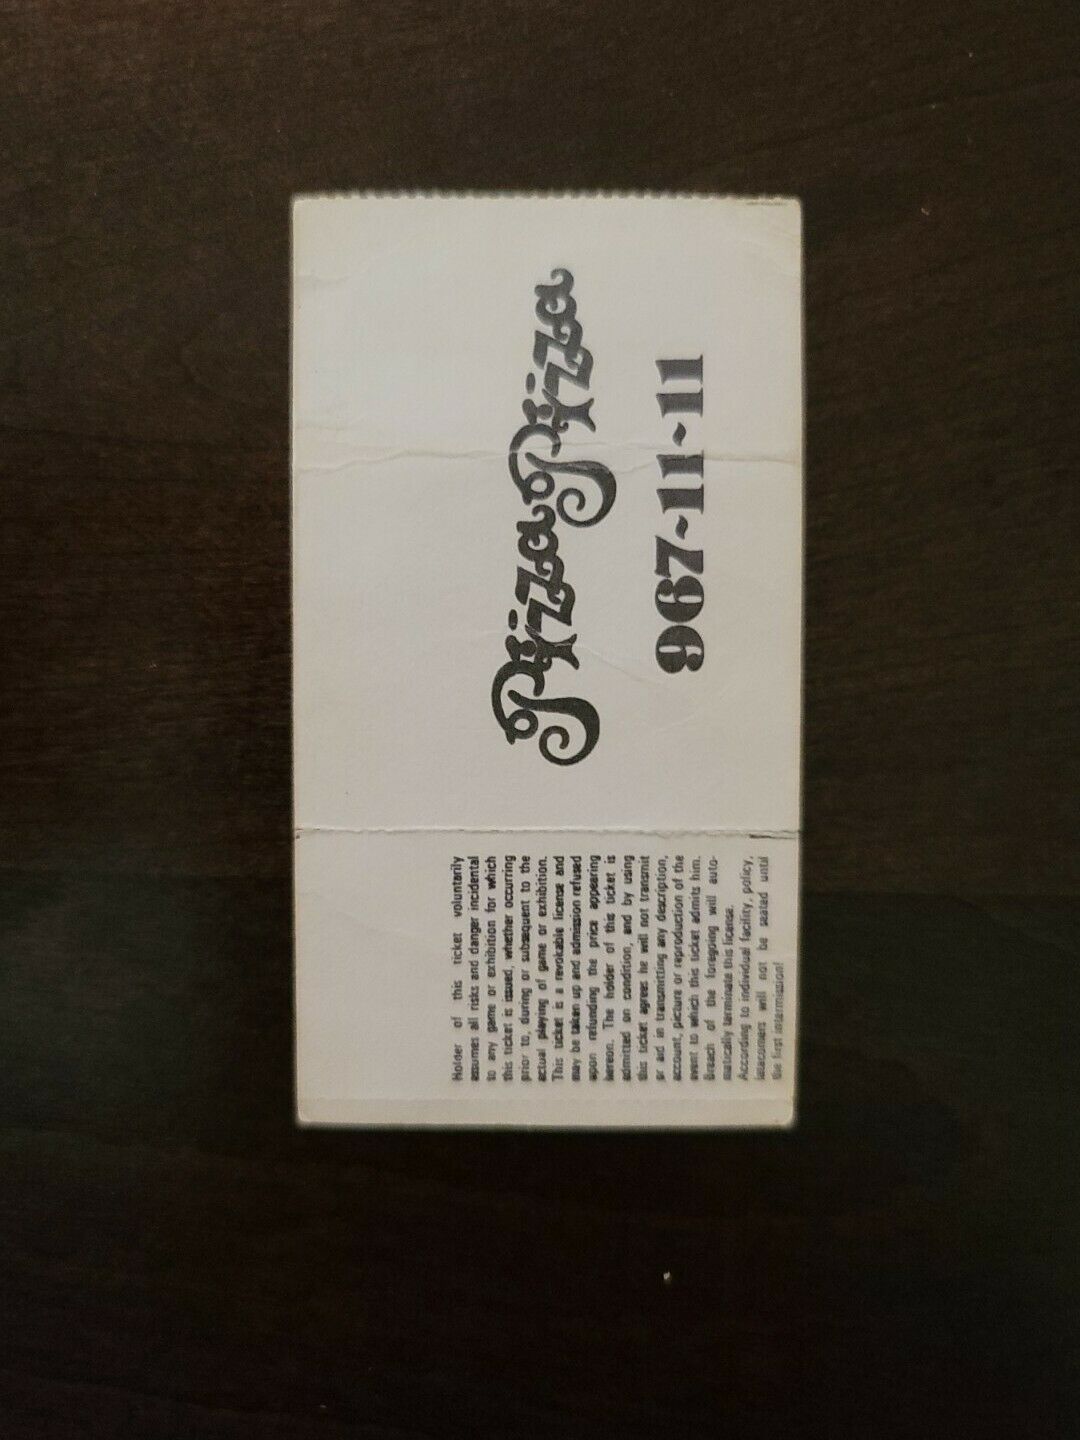 Def Leppard 1983 Toronto Maple Leaf Gardens Original Concert Ticket Stub